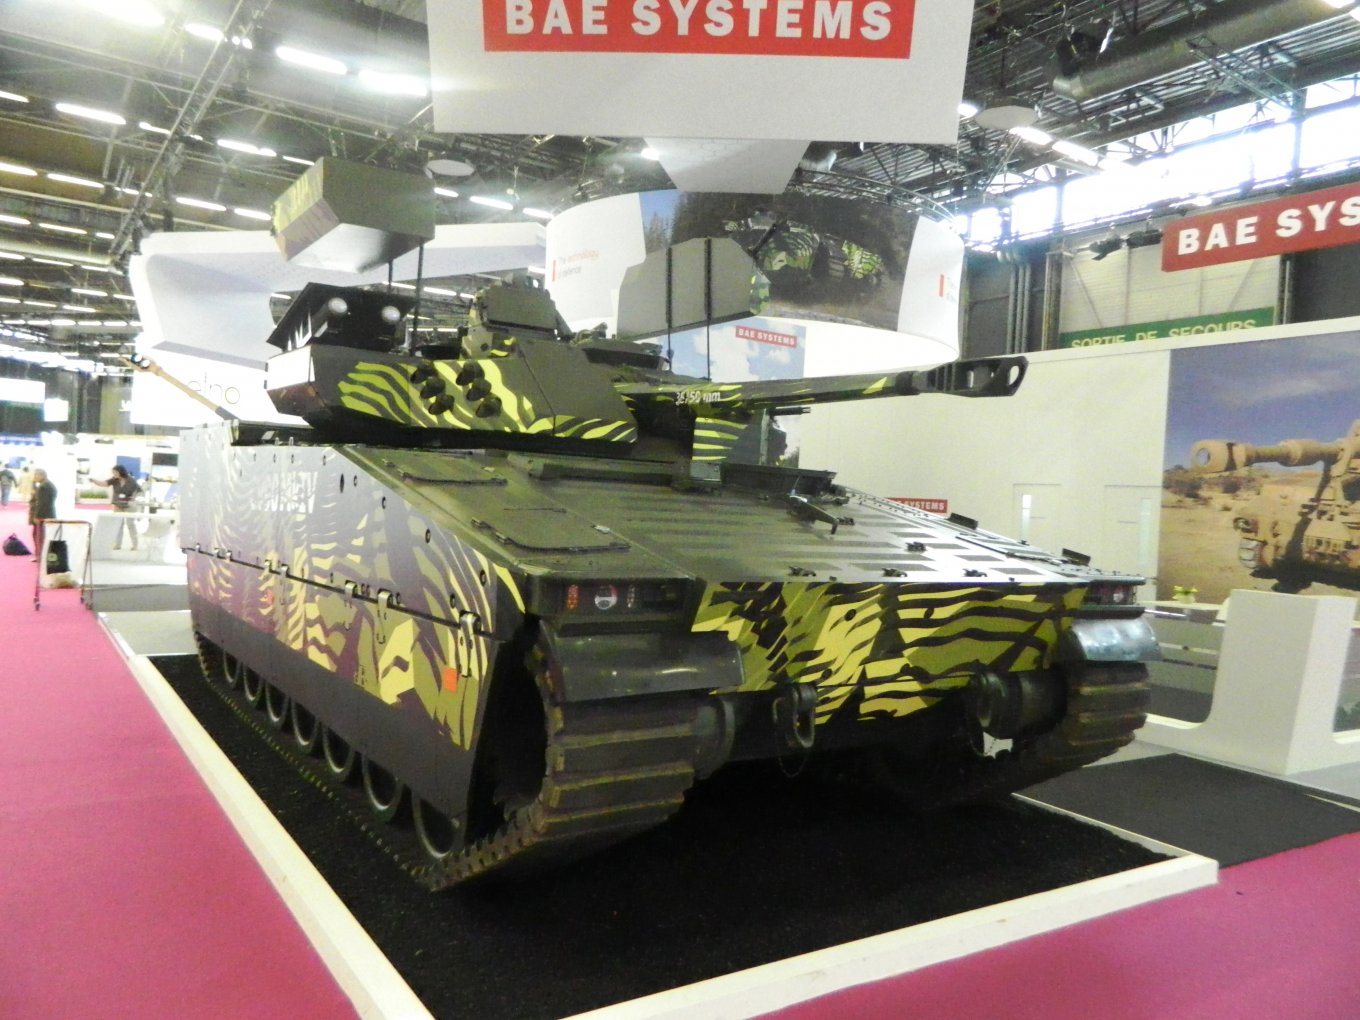 CV90 Mk IV IFVpresented by BAE Systems on Eurosatory-2018 defense exhibition in Paris, Valerii Riabykh, Defense Express